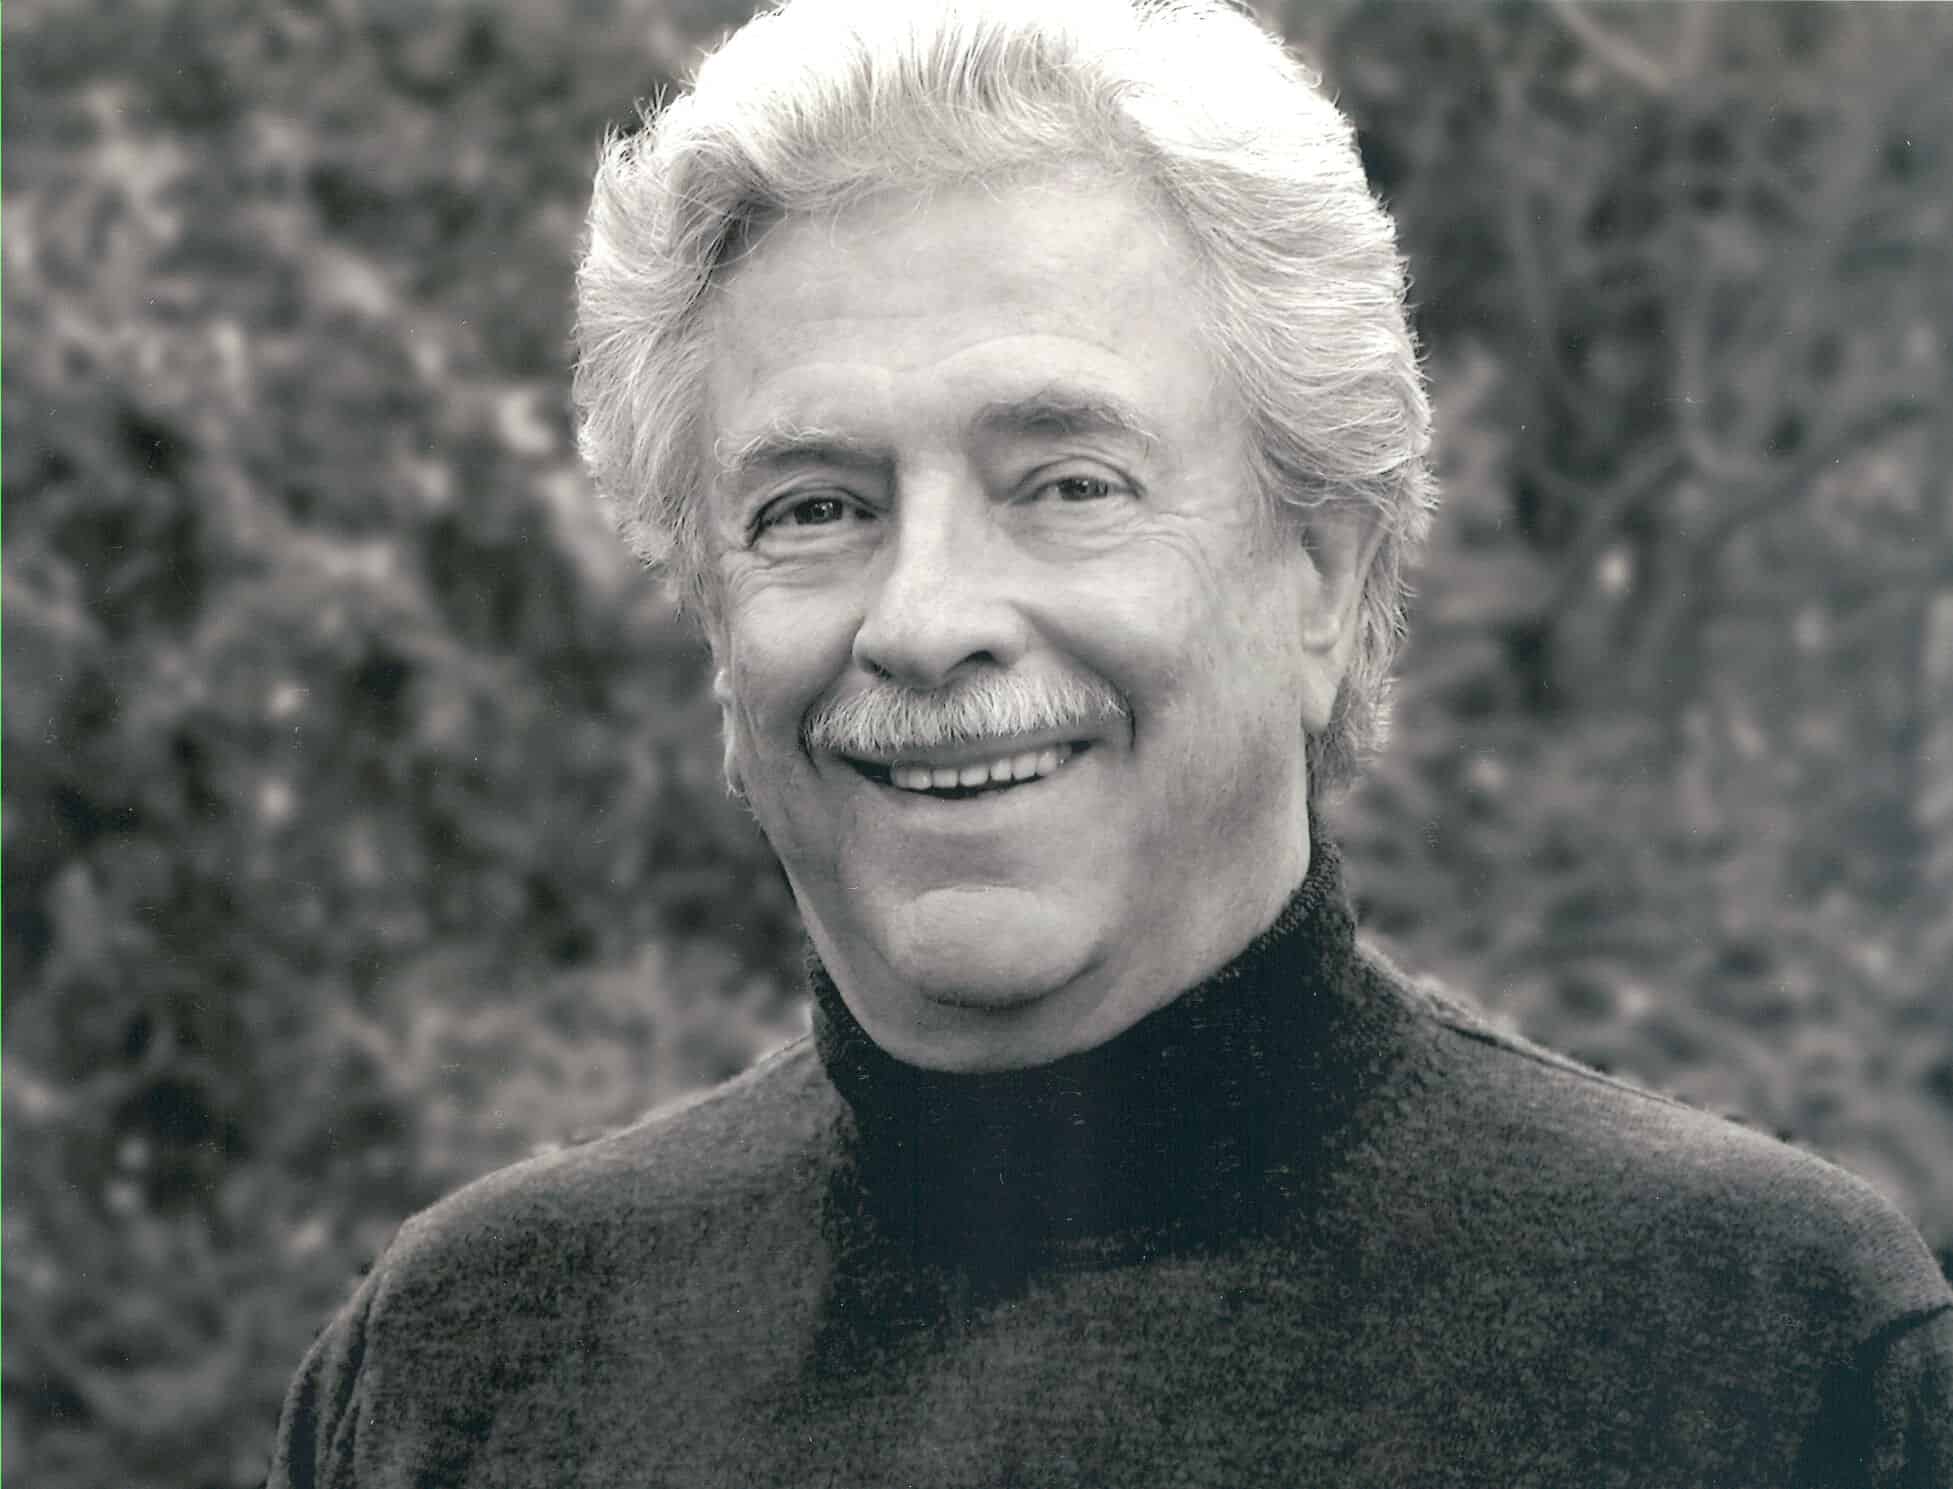 Wayne Peterson, composer